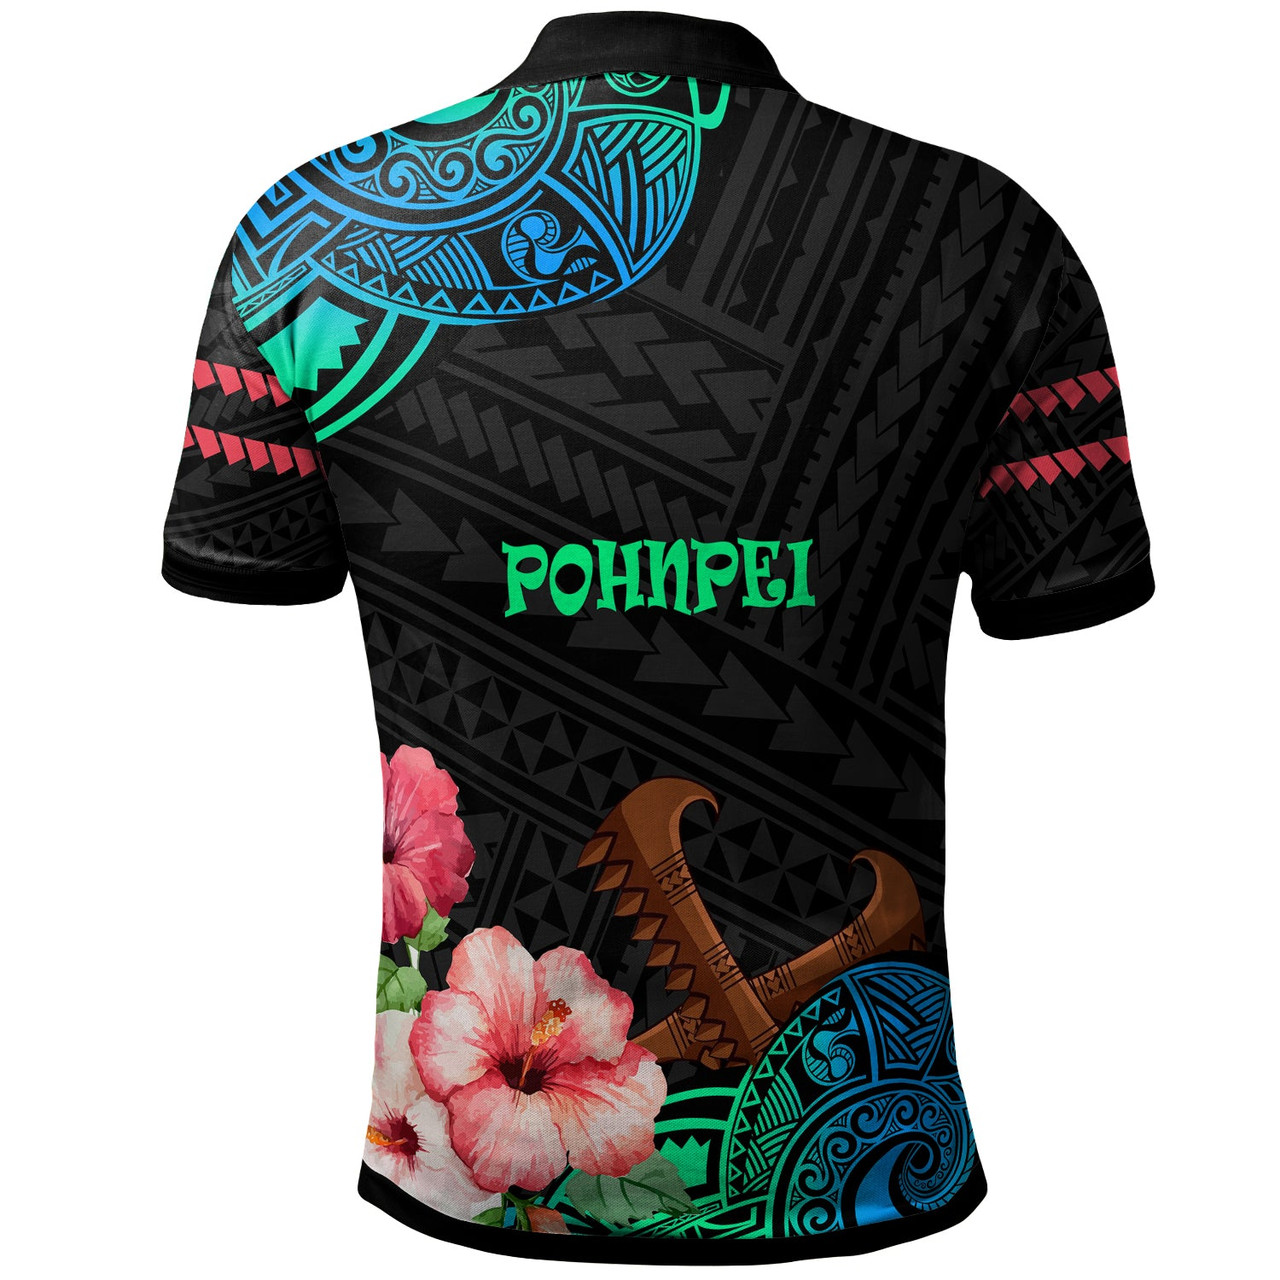 Pohnpei Polo Shirt - Polynesian Pride with Hibicus Flower Tribal Pattern